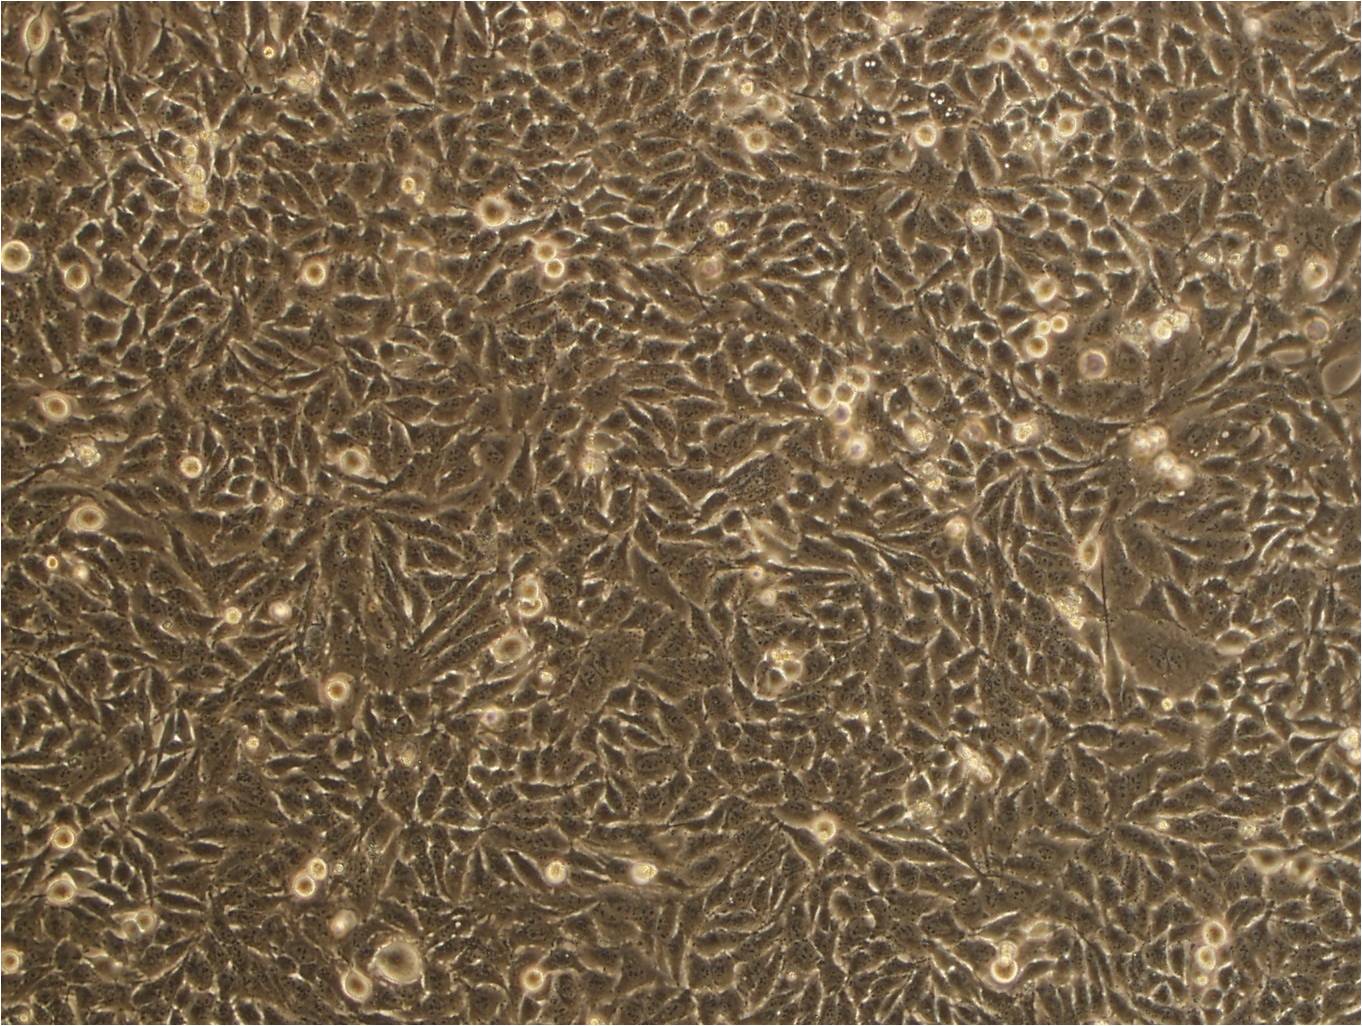 MDCK-II Epithelial Cell|犬肾传代细胞(有STR鉴定)